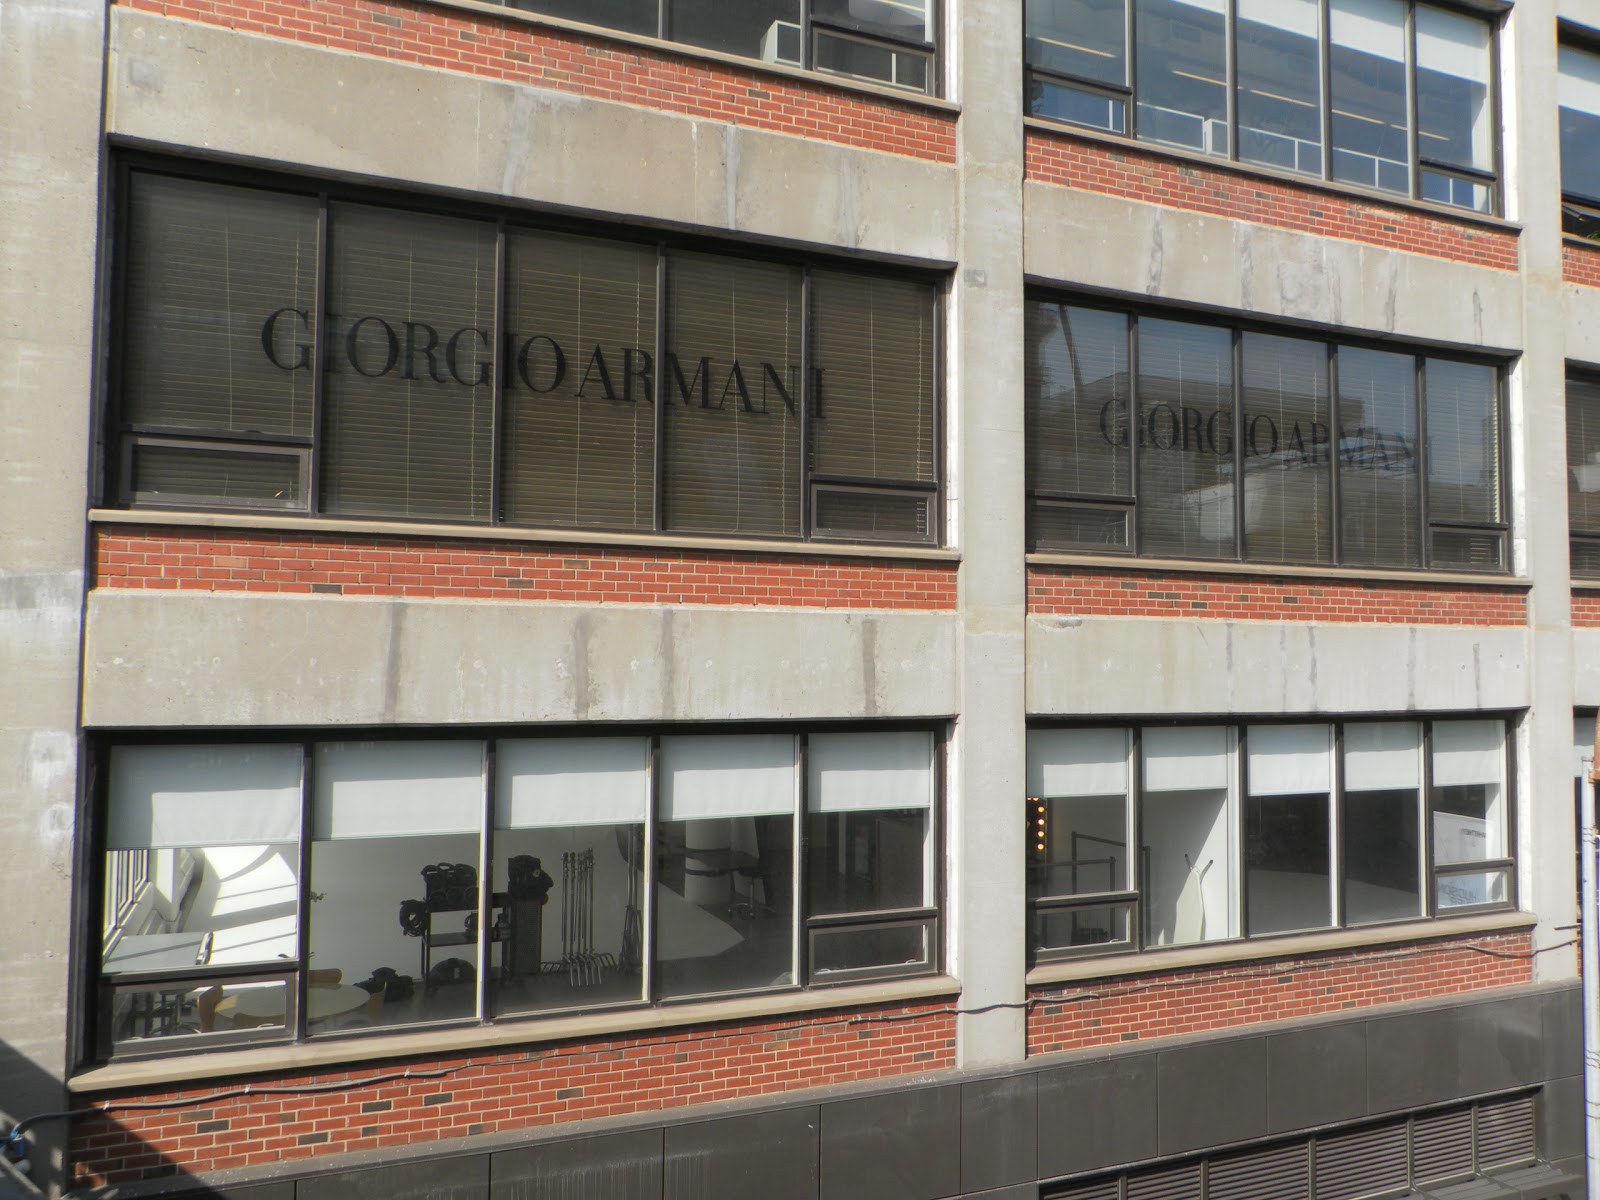 Photo of Giorgio Armani Corporation in New York City, New York, United States - 4 Picture of Point of interest, Establishment